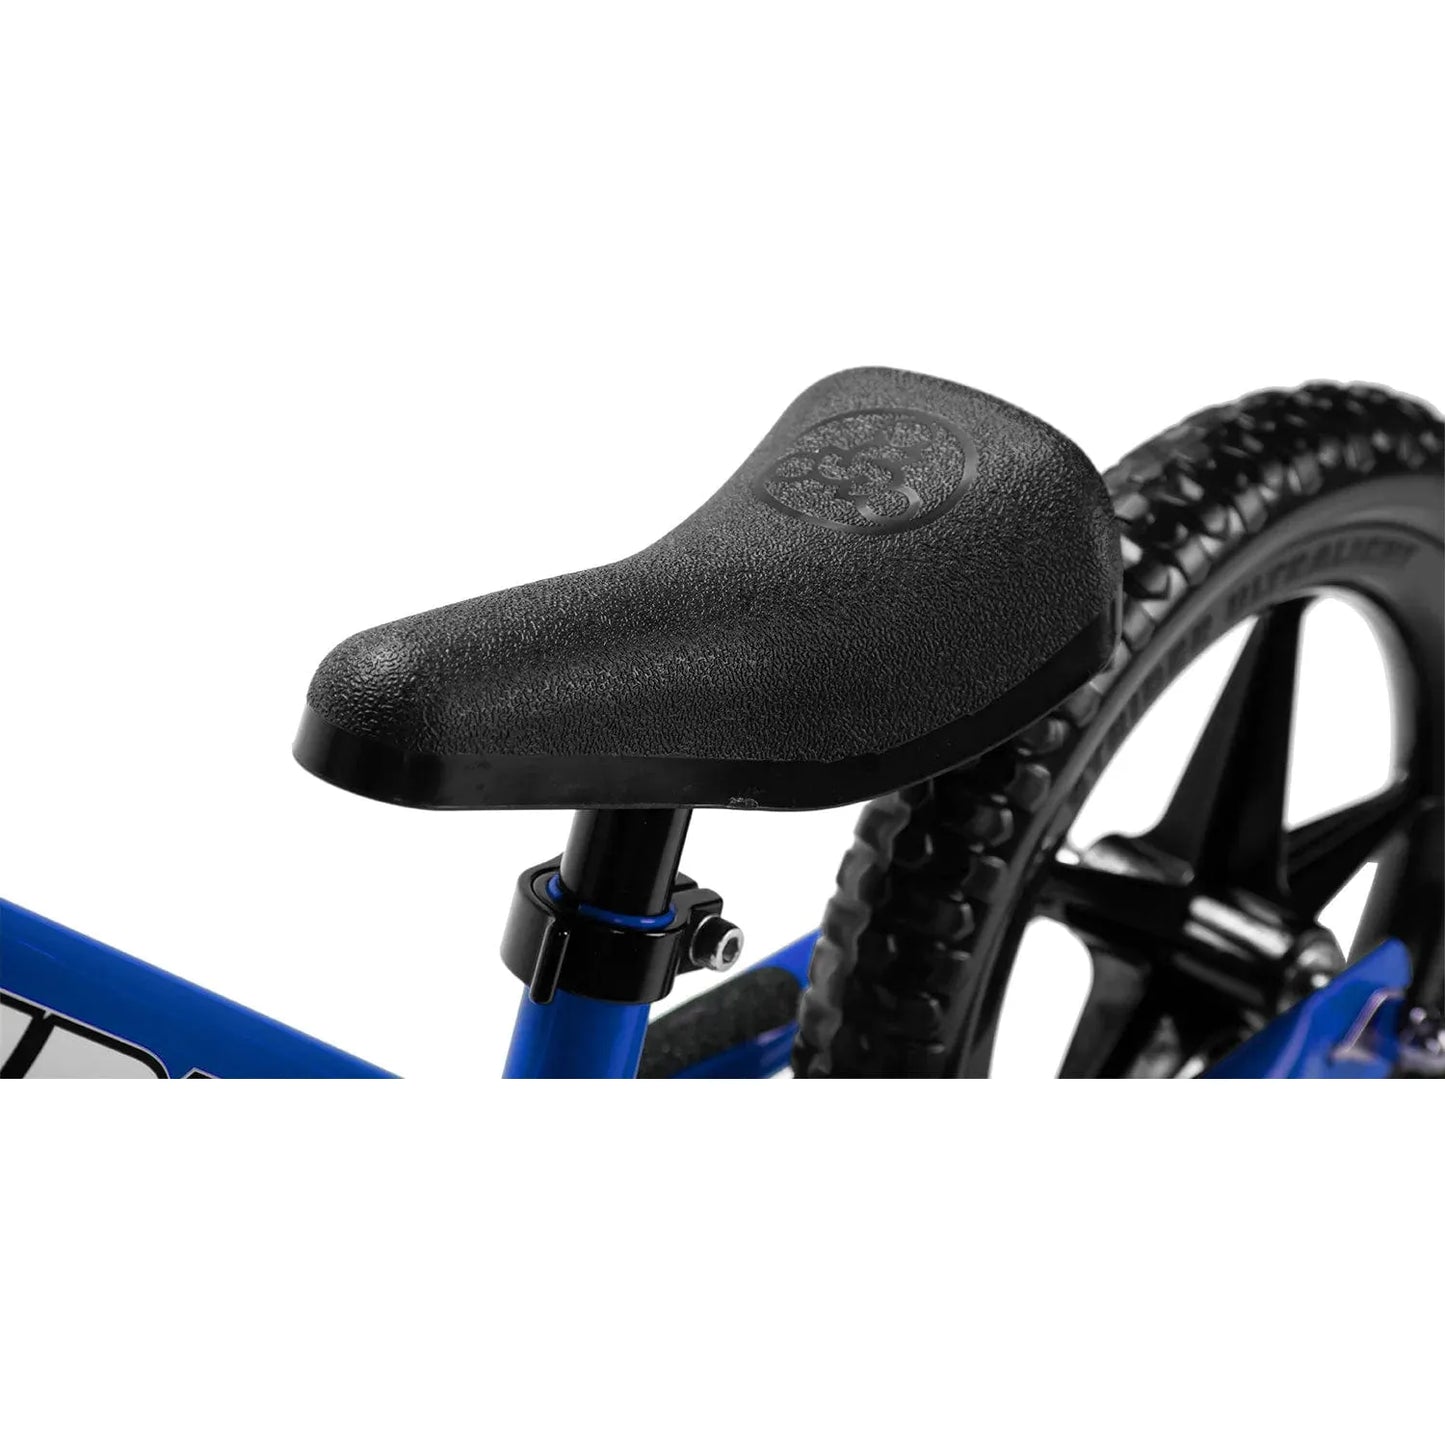 Strider Classic 12 inch Balance Bike - Blue seat close up